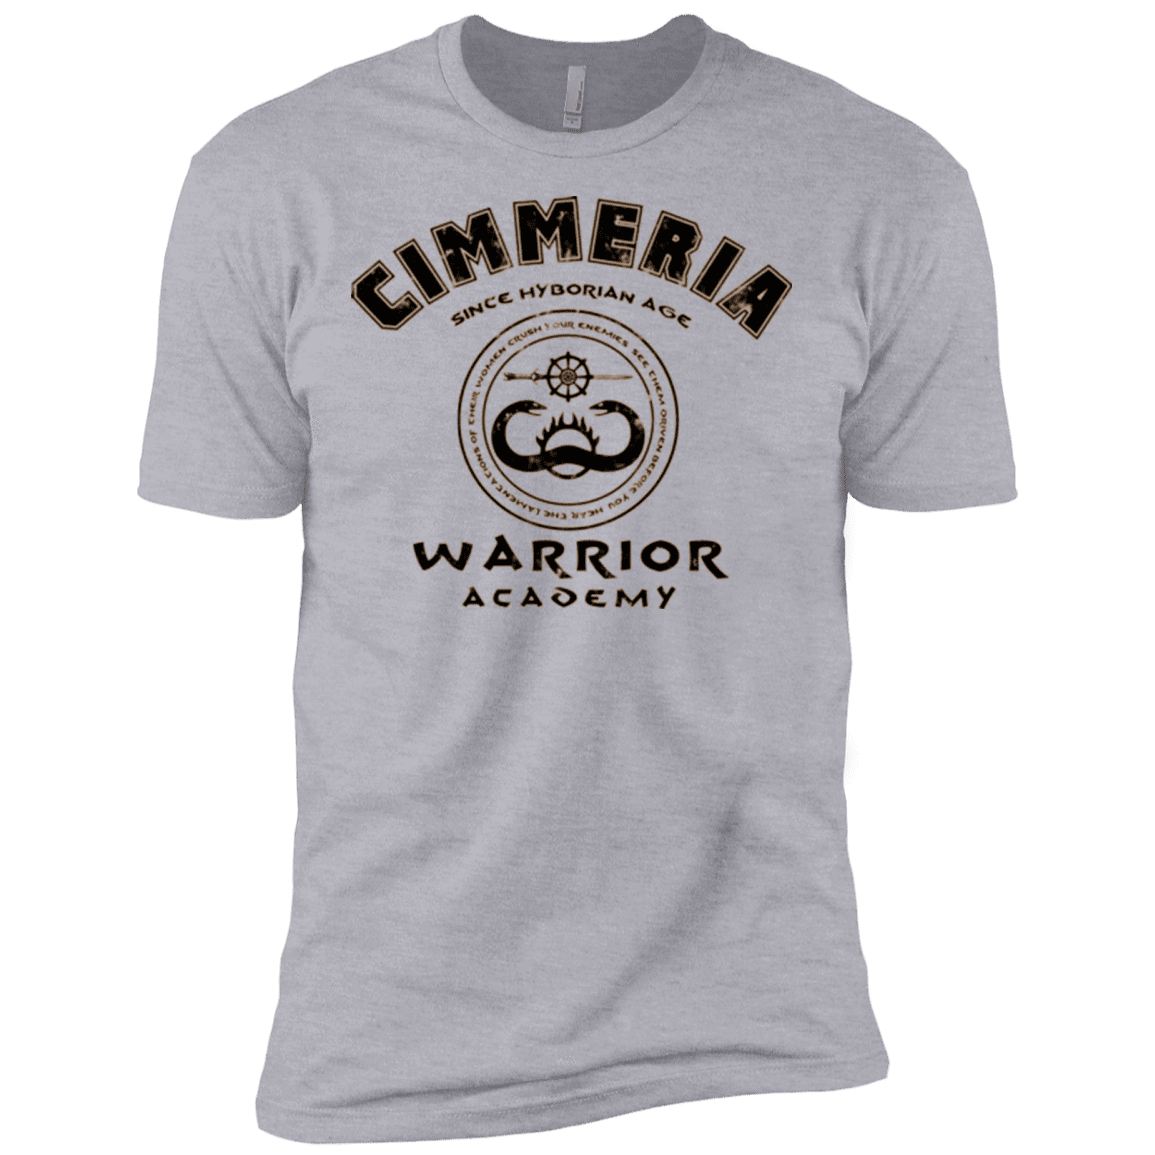 T-Shirts Heather Grey / X-Small Crimmeria Warrior academy Men's Premium T-Shirt